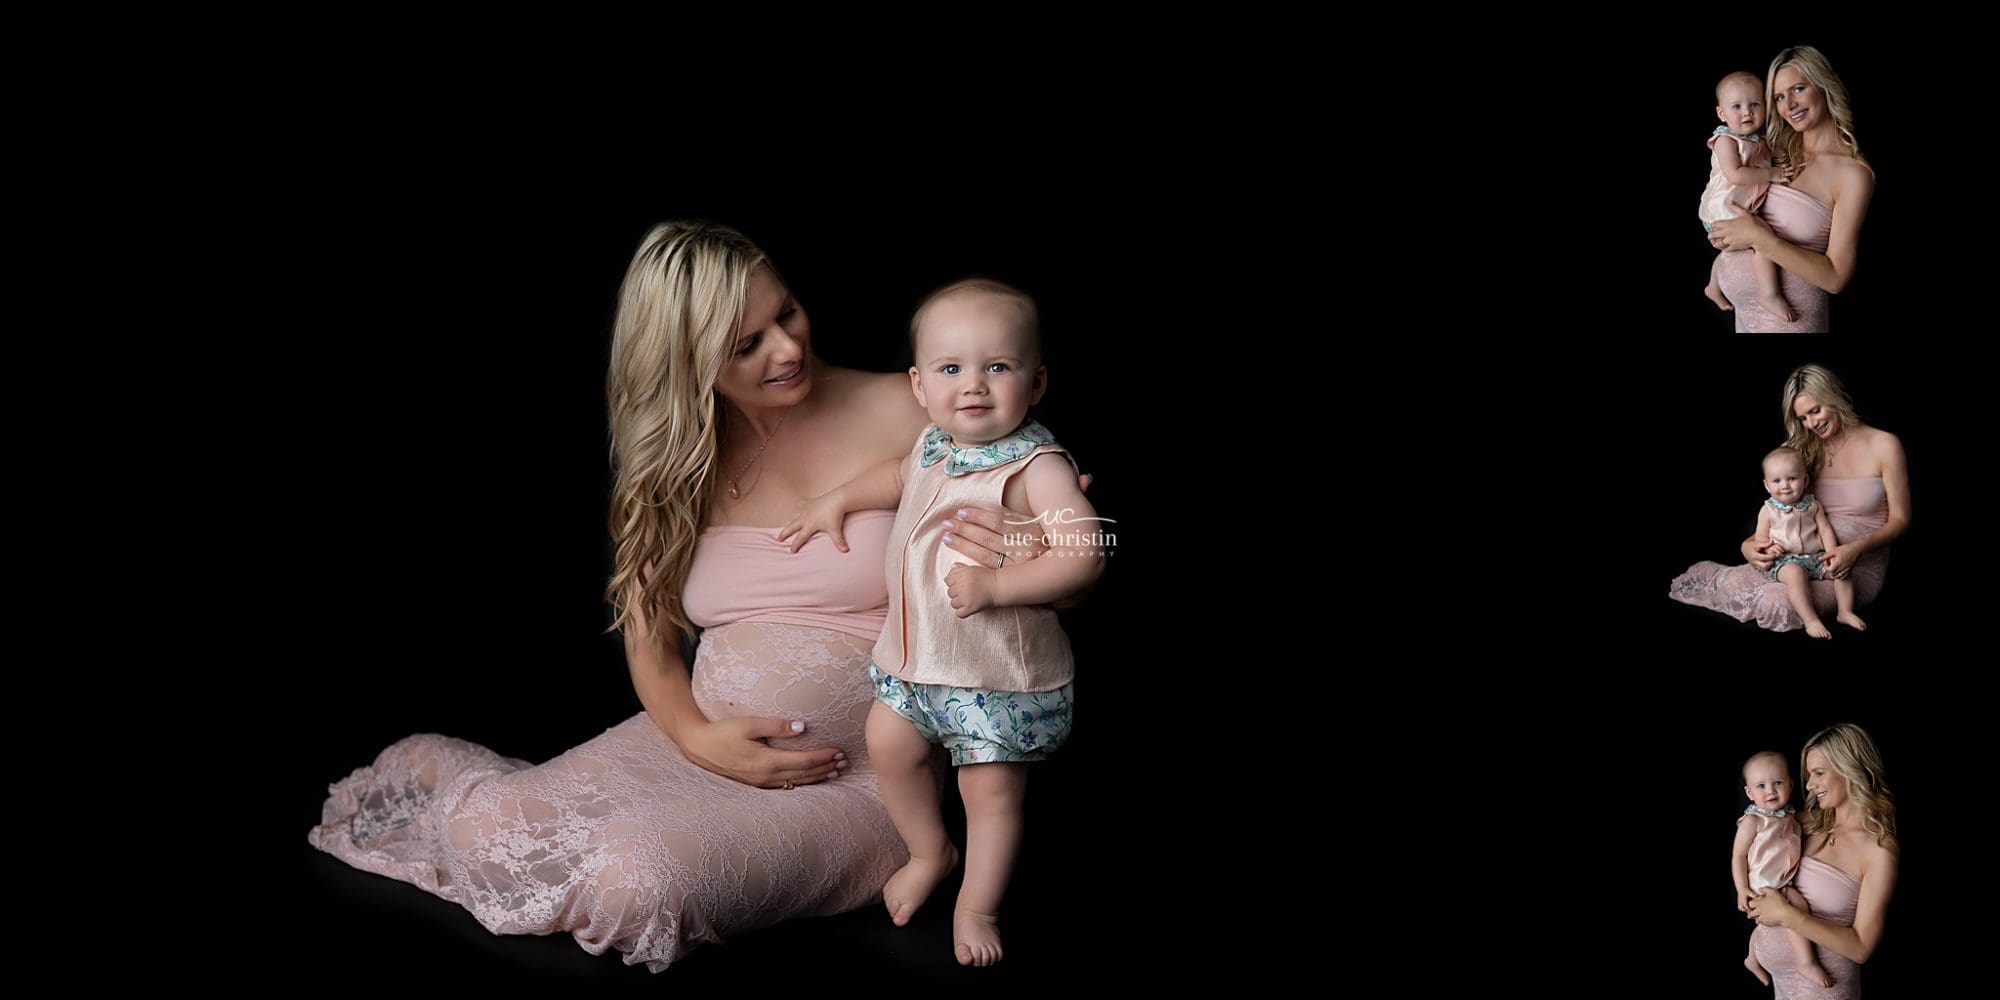 Connecticut Family Photography,Connecticut Maternity Photographer,Connecticut Newborn Photographer,